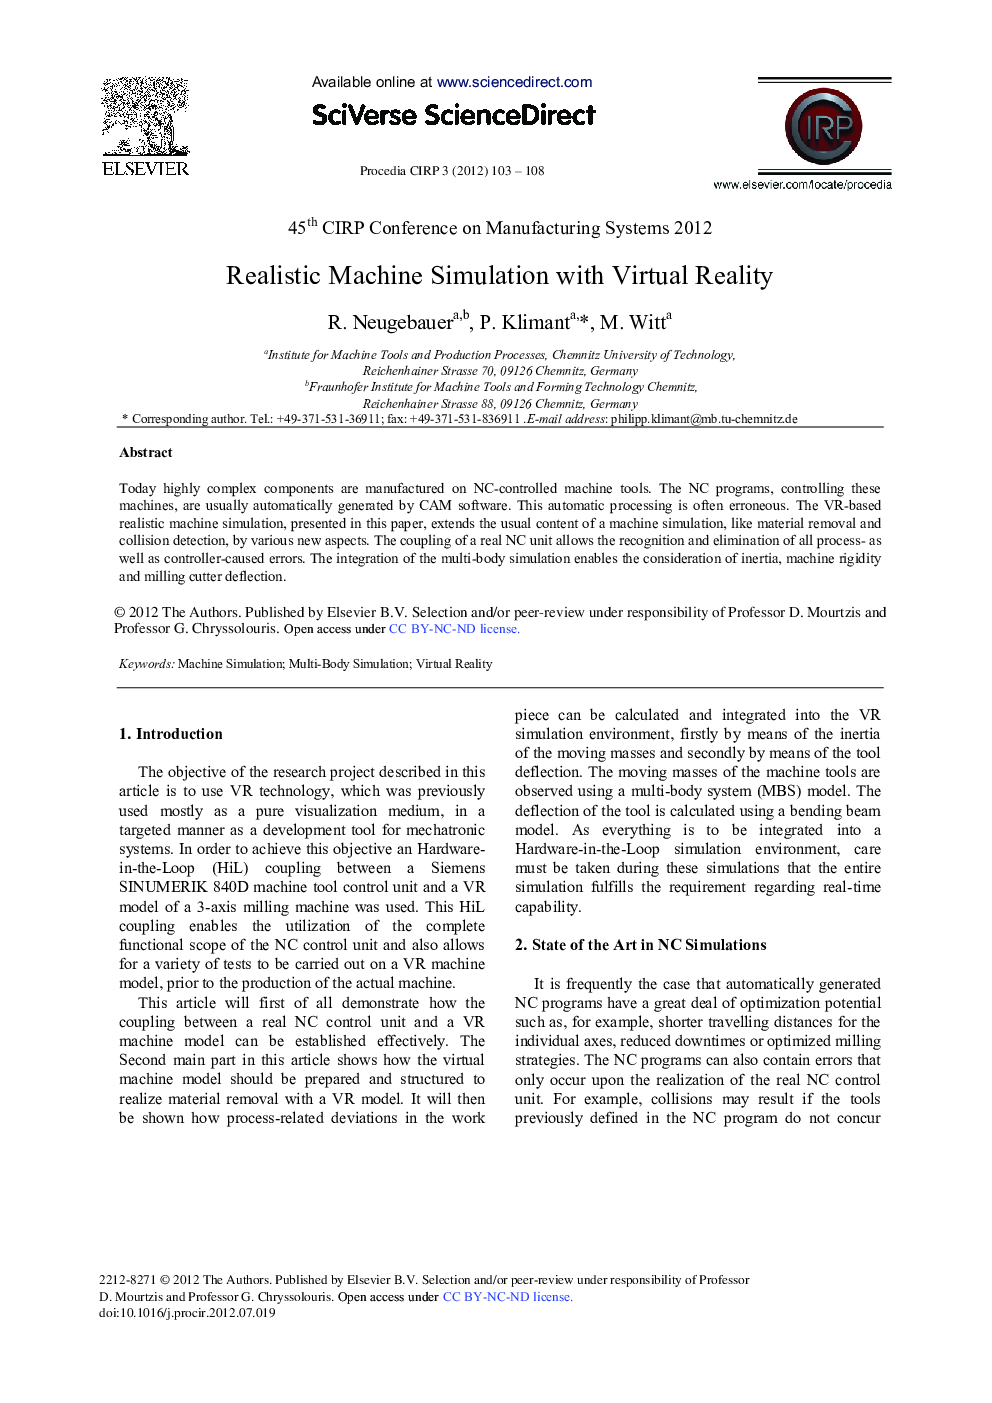 Realistic Machine Simulation with Virtual Reality